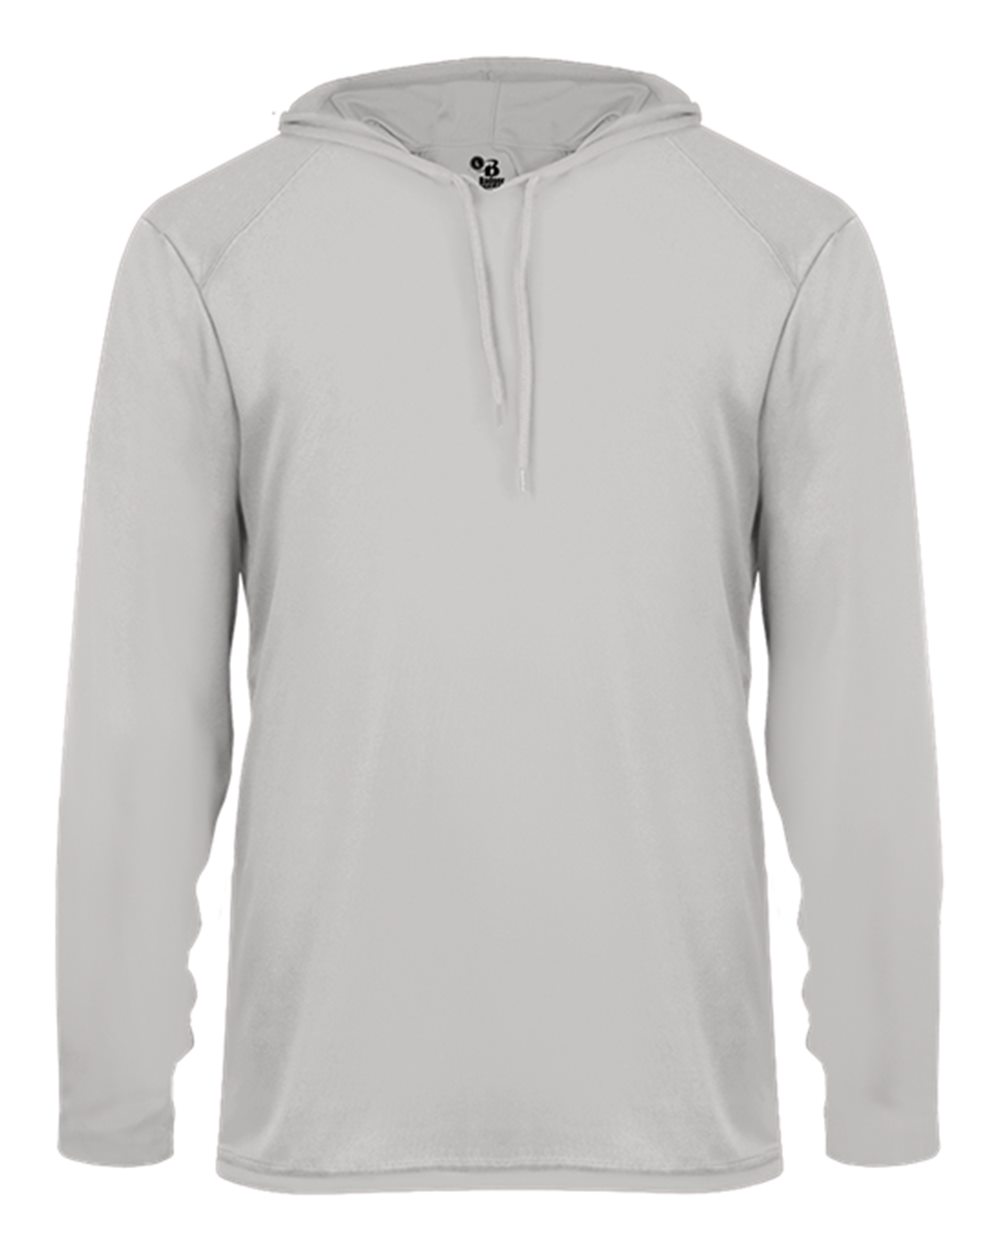 Badger - B-Core Hooded Long Sleeve T-Shirt - 4105 - Century Marketing, Inc.